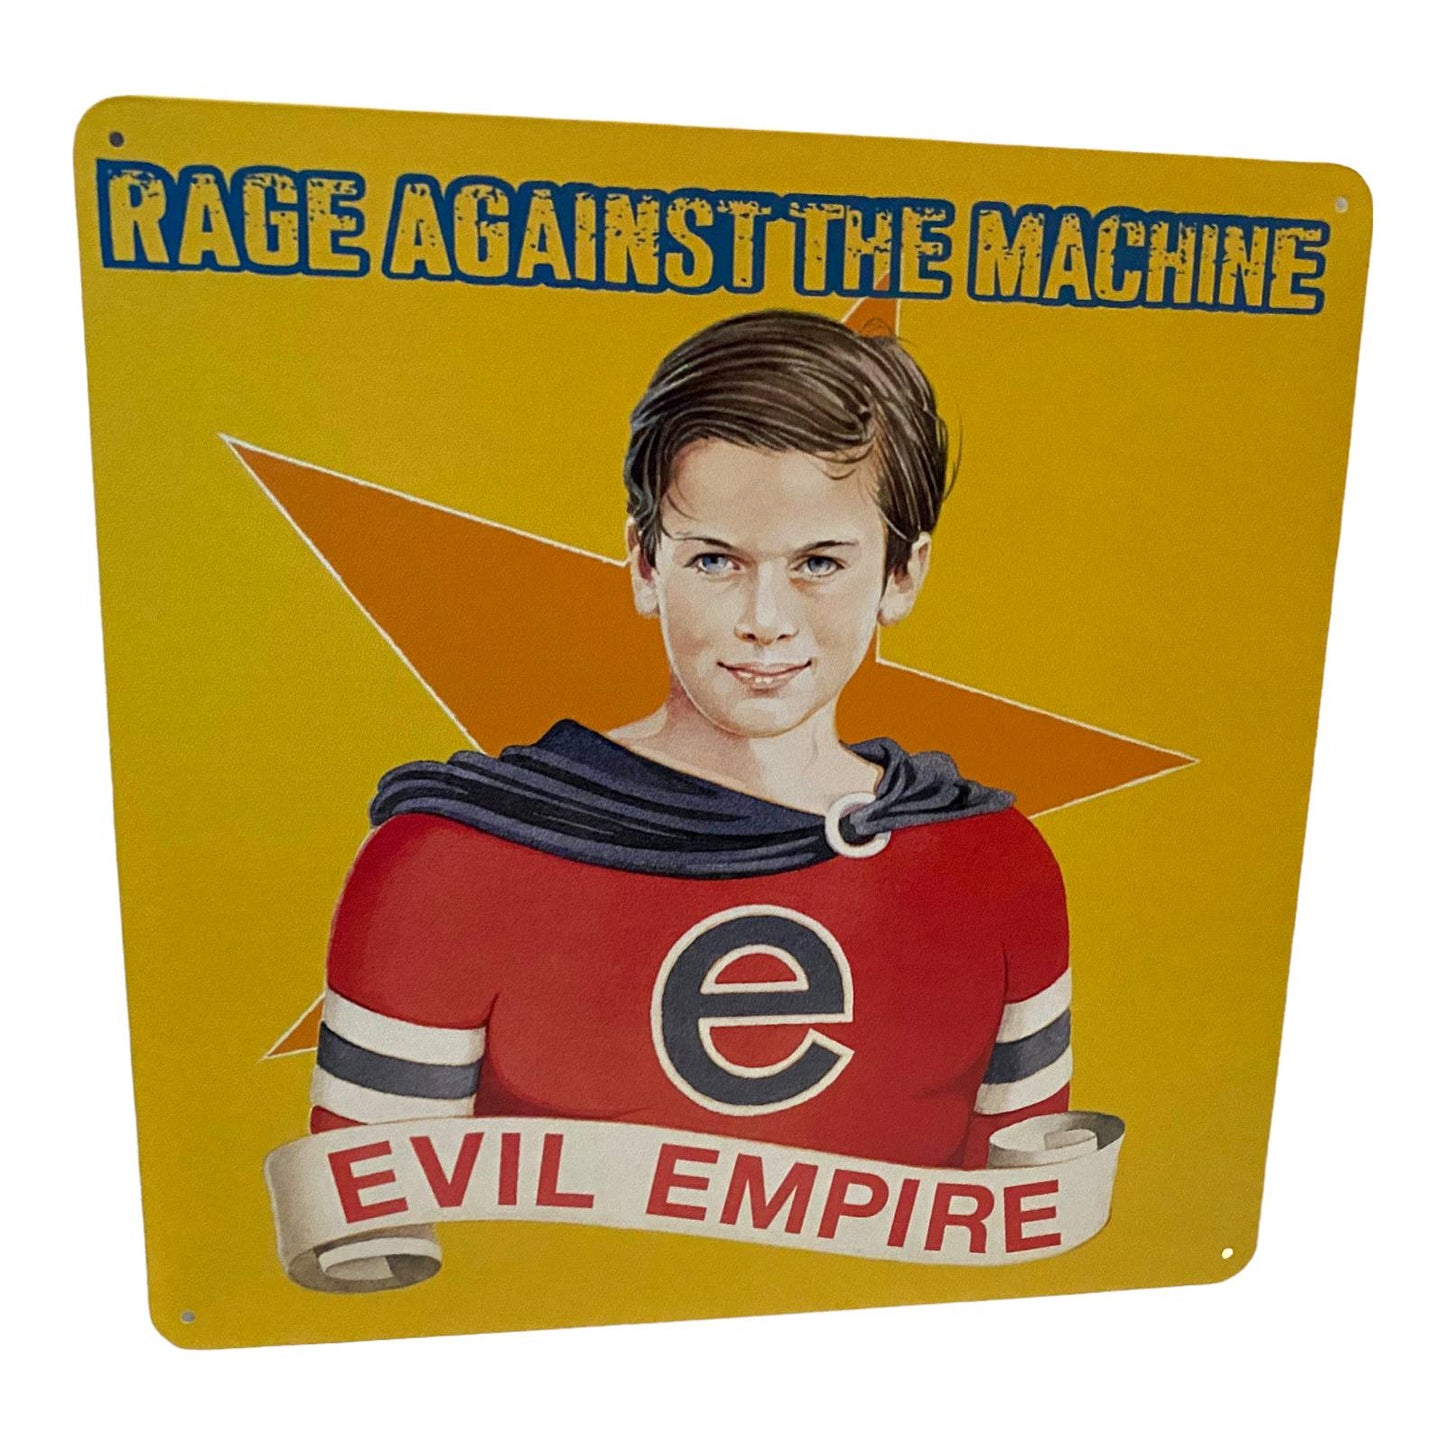 Rage Against The Machine - Evil Empire Album Cover Metal Print Tin Sign 12"x 12"